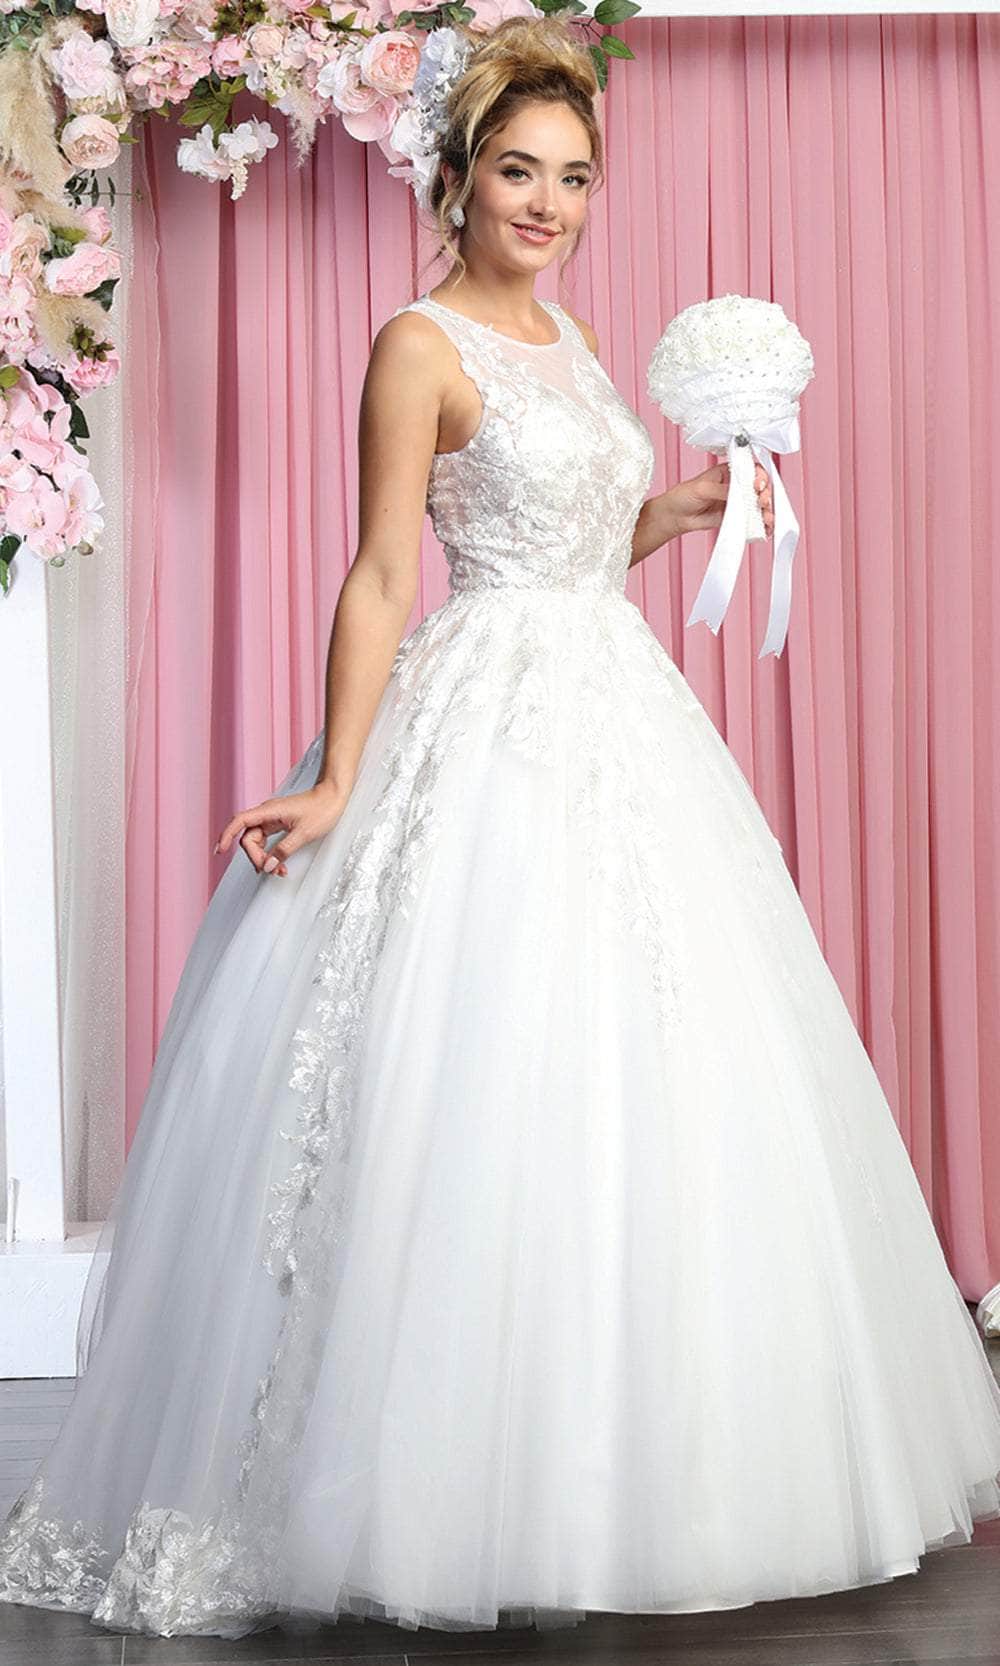 May Queen RQ7900 - Sleeveless Illusion Jewel Neckline Wedding Dress Wedding Dresses